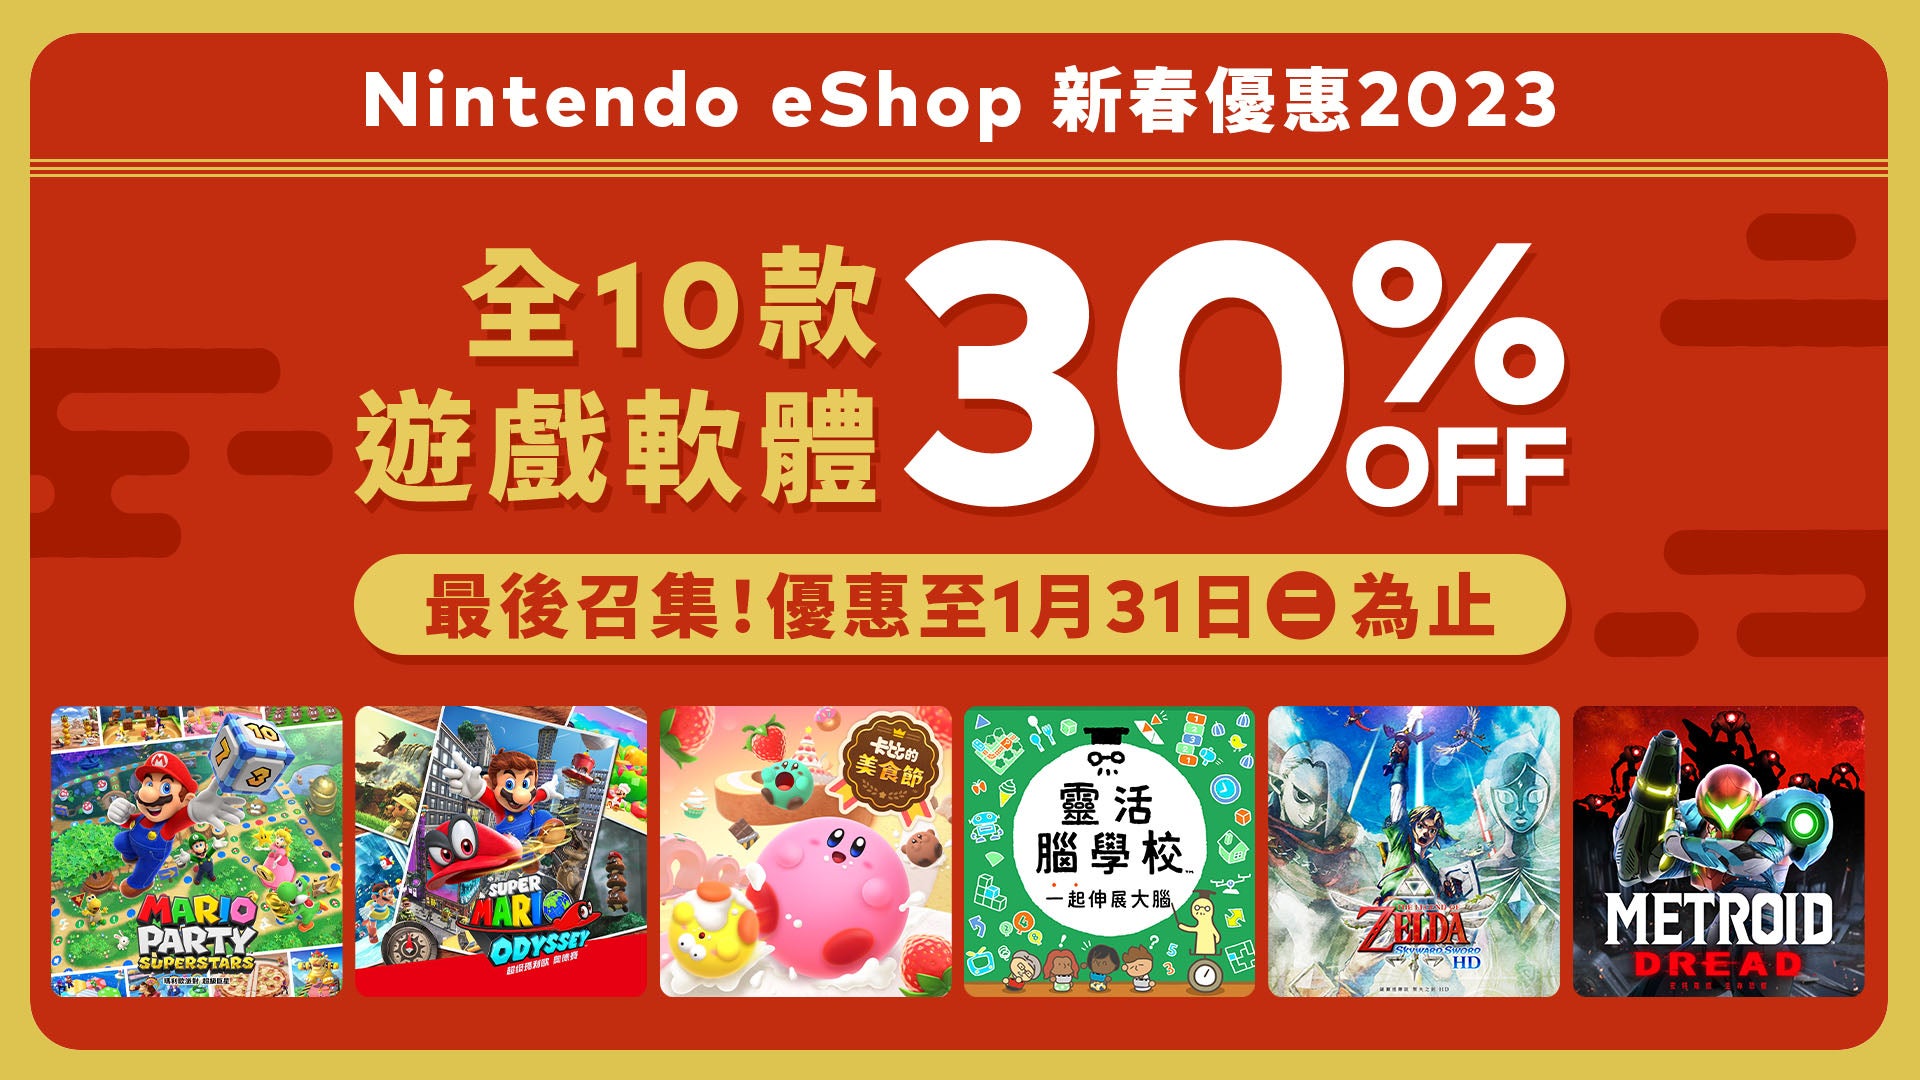 Nintendo eShop 新作上架資訊 1月20日（五）！ 29%title%